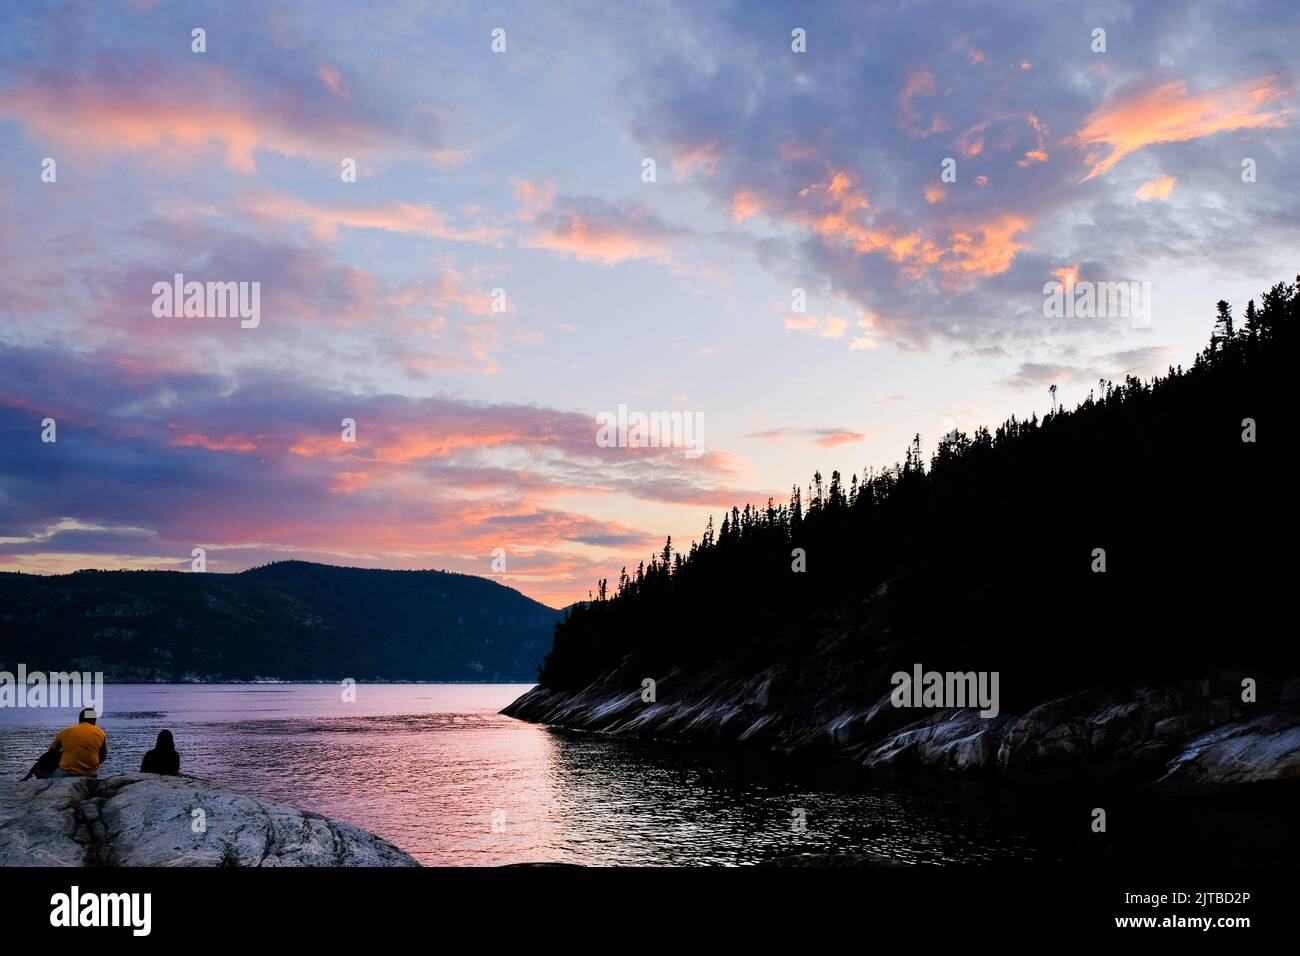 Evening view of the Saguenay Fjord, Saguenay River, near Tadoussac, Quebec, Canada. Stock Photo